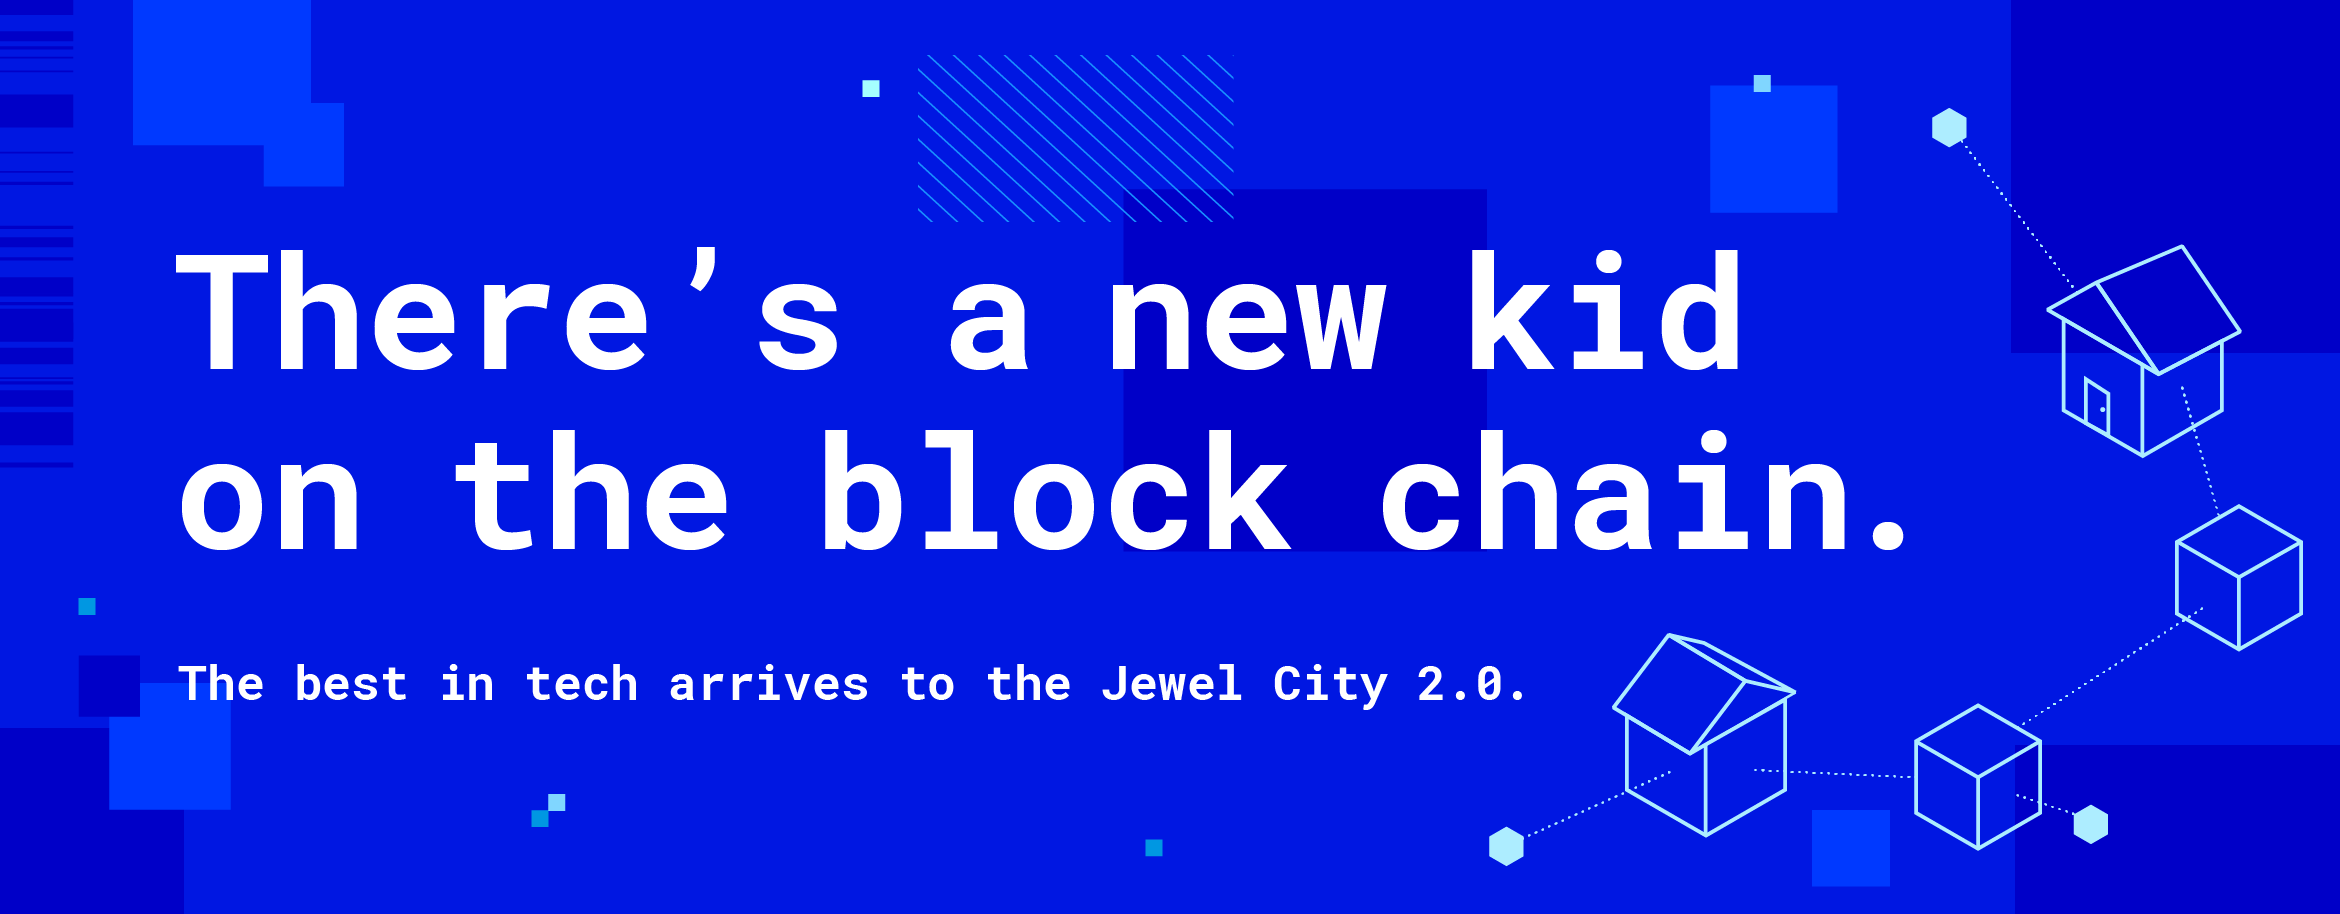 Glendale Tech Week Blockchain digital banner designed by Kilter